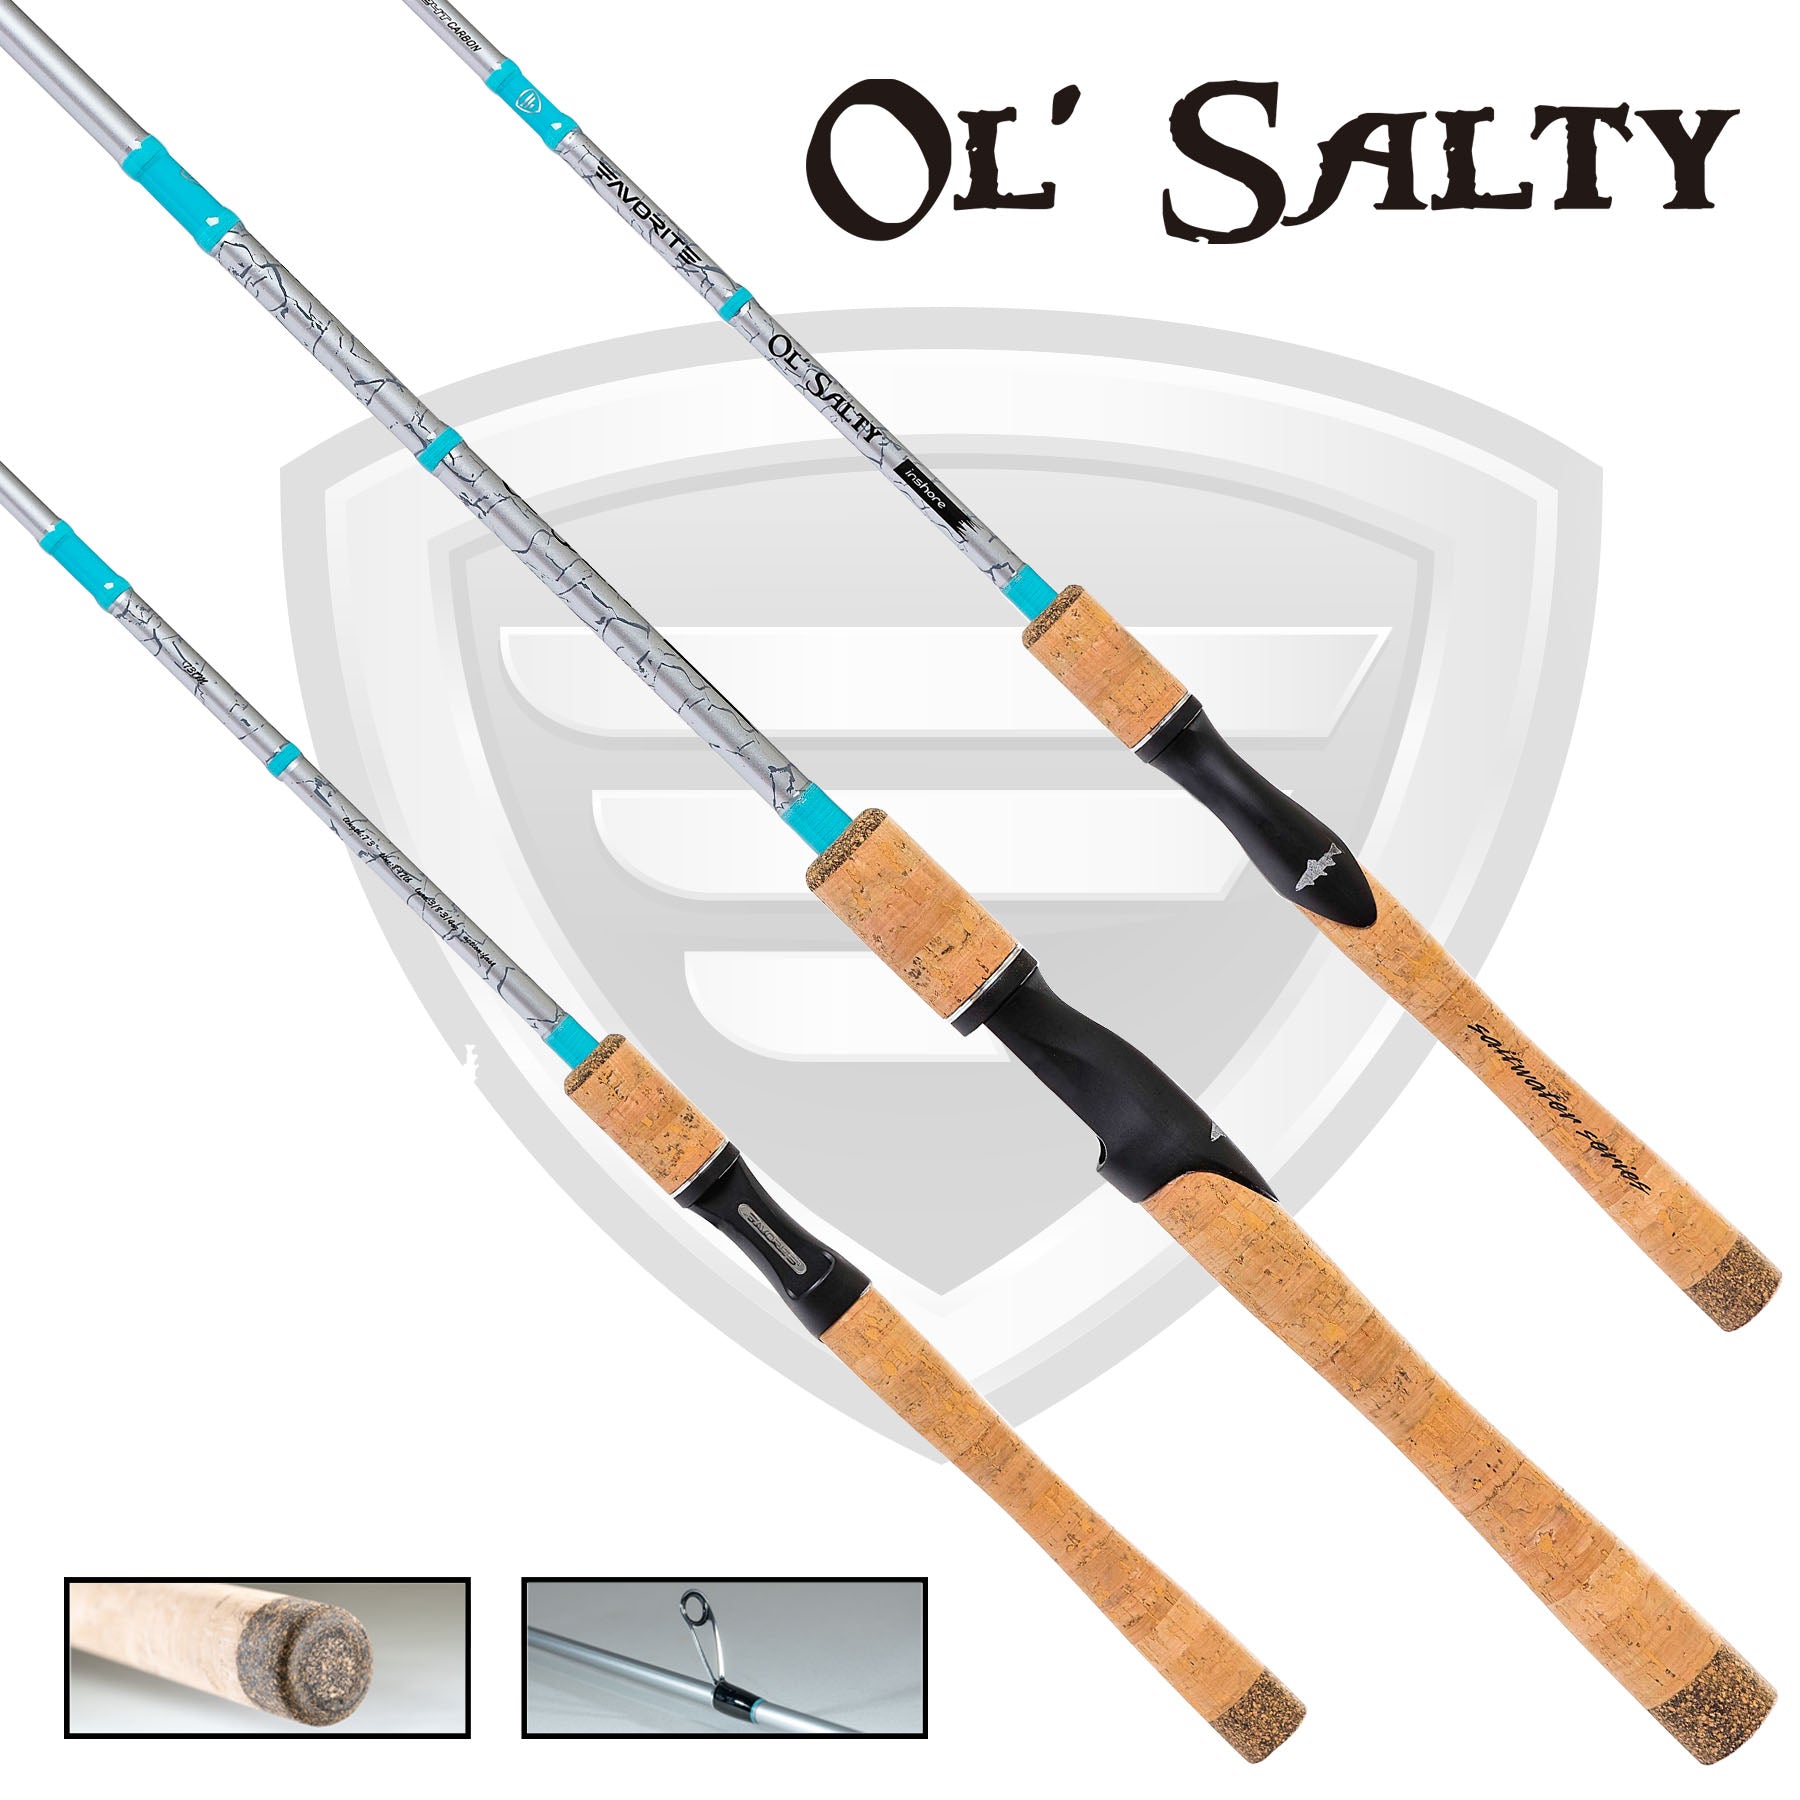 Favorite Ol' Salty Spinning Rod - OLS-781H